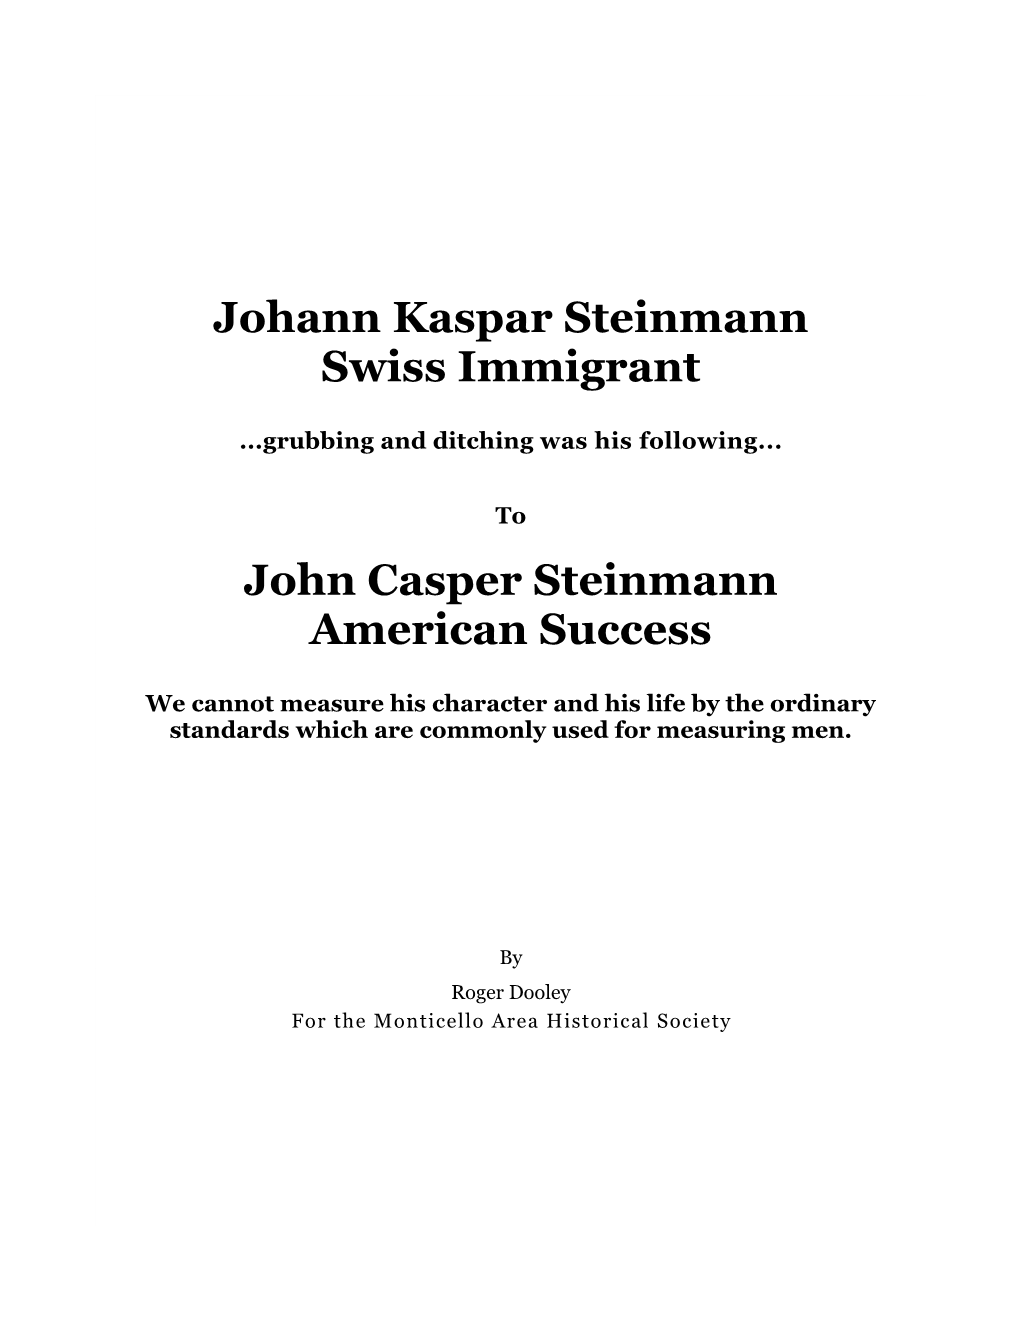 John Casper Steinmann American Success